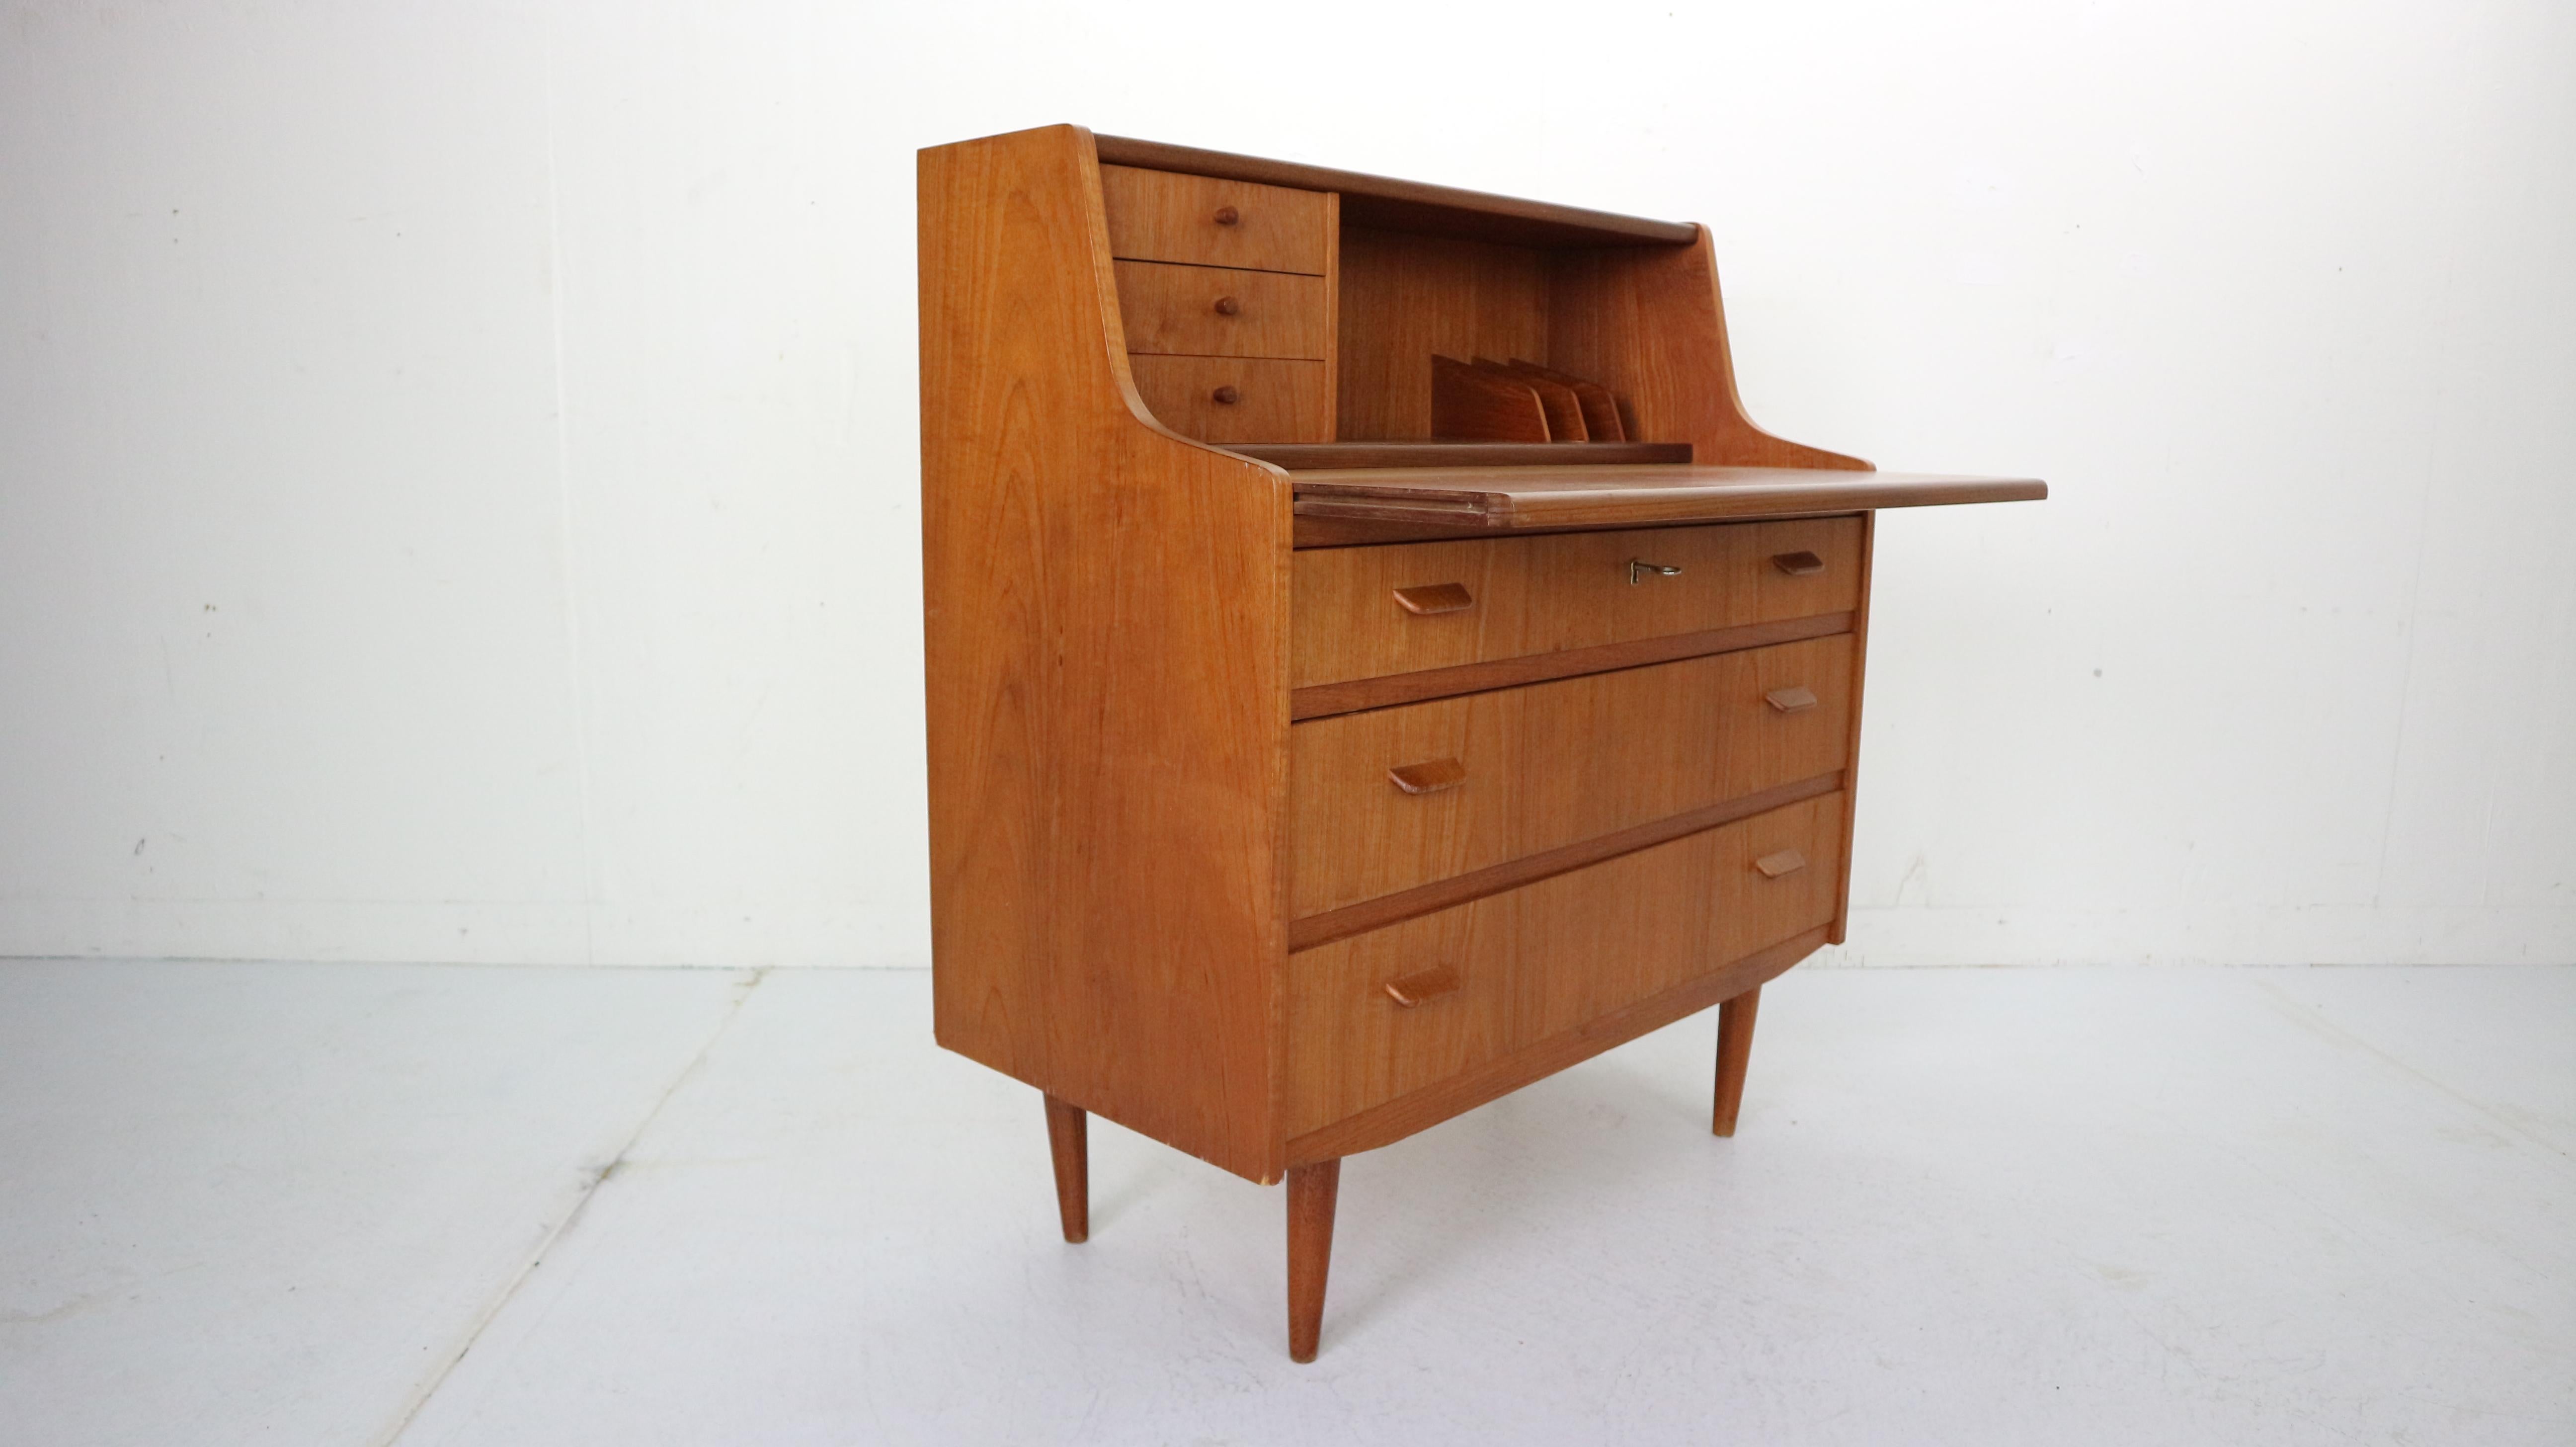 Midcentury Danish Modern Teak Wood Secretary Desk, Chest of Drawers, 1960s (Dänisch)